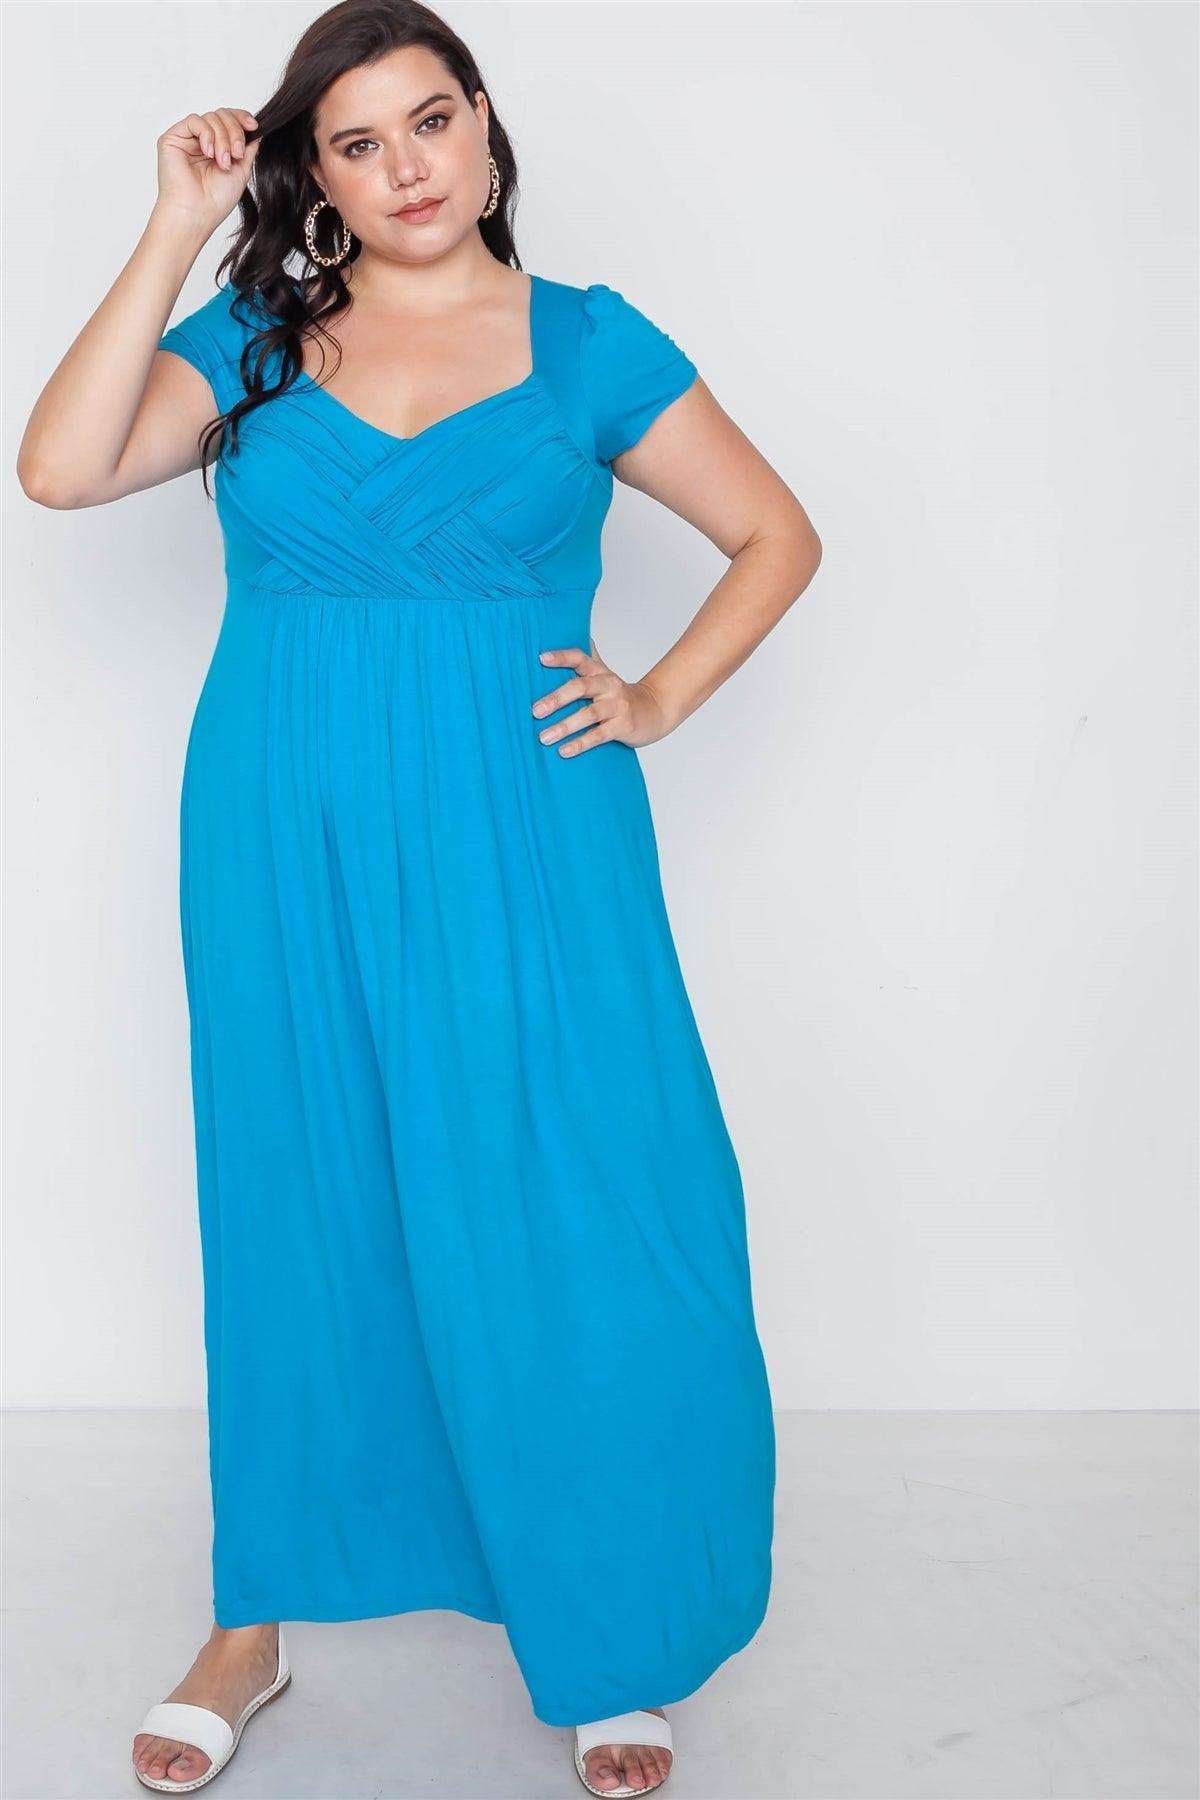 Plus Size Hawaii Blue Short Sleeve Maxi Dress